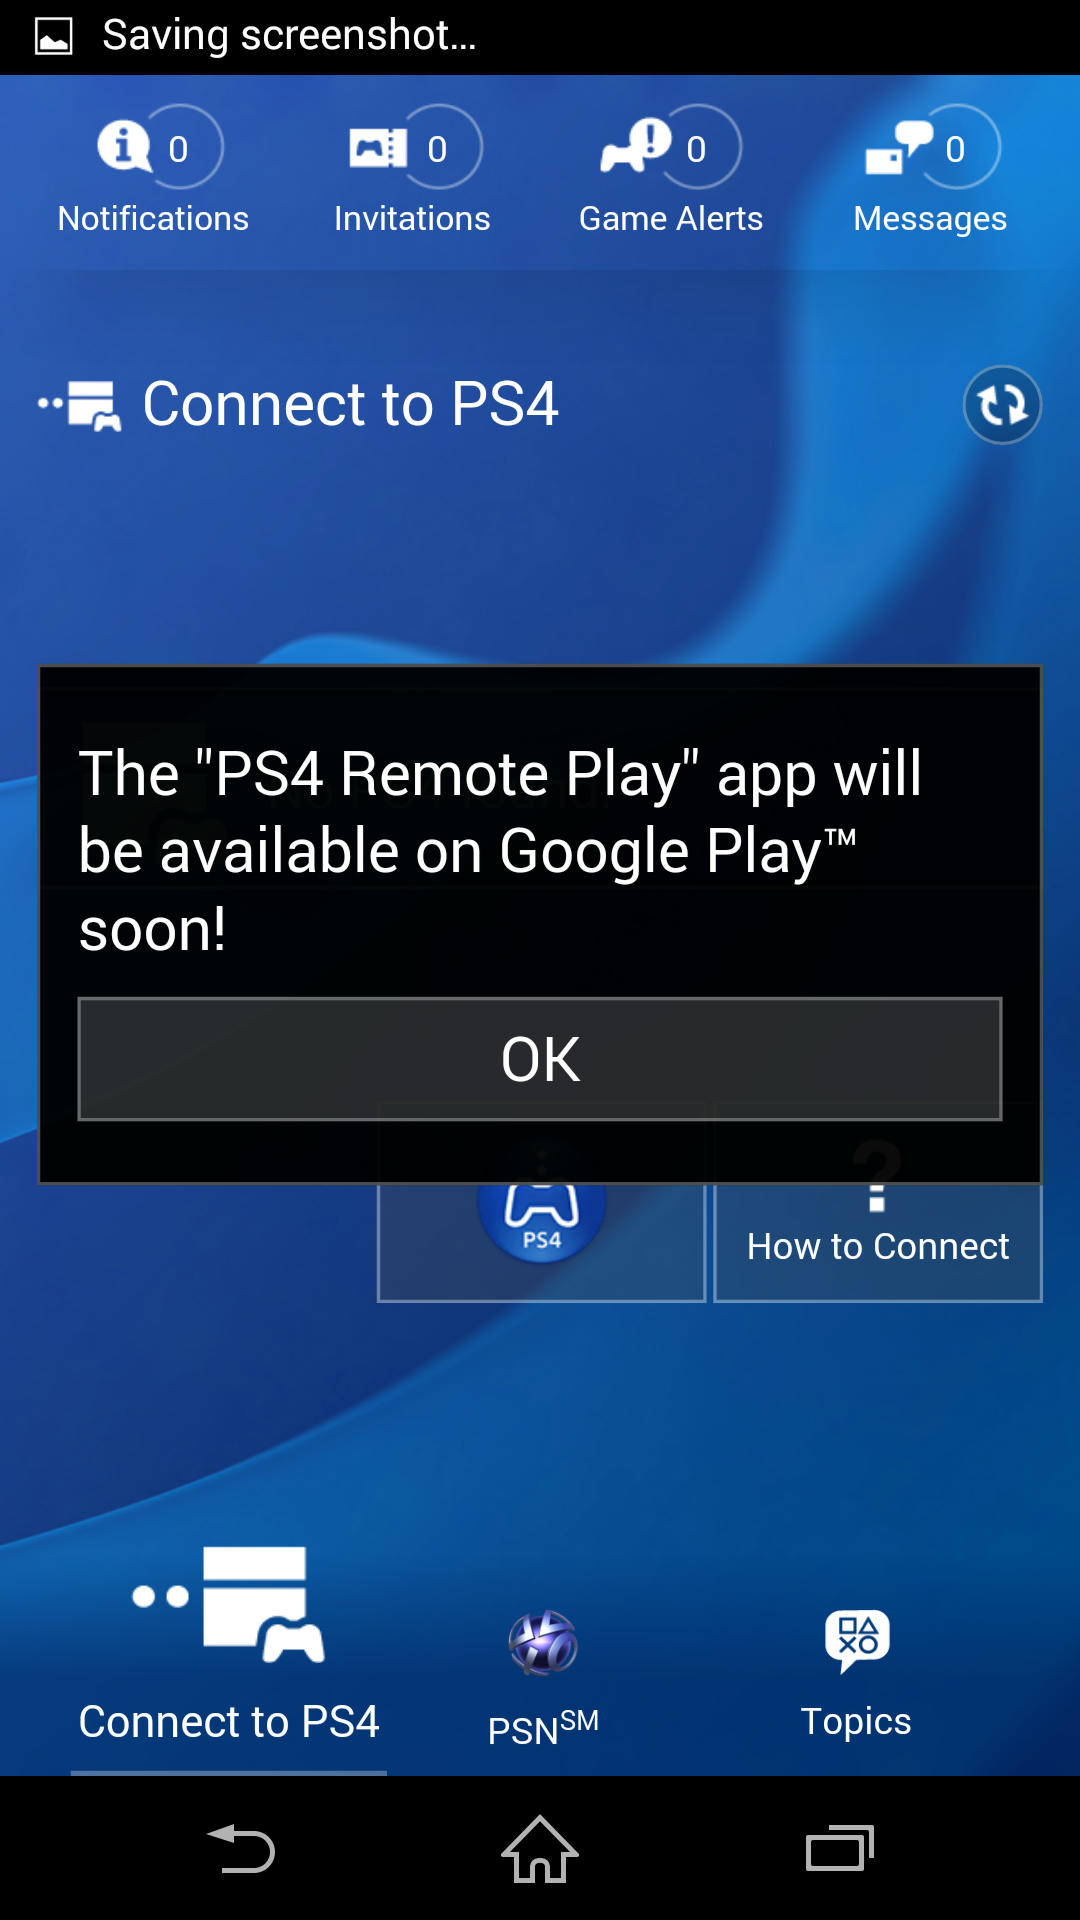 PS4 Remote Play ouvert à tous les appareils Android 4.0 ! Applications